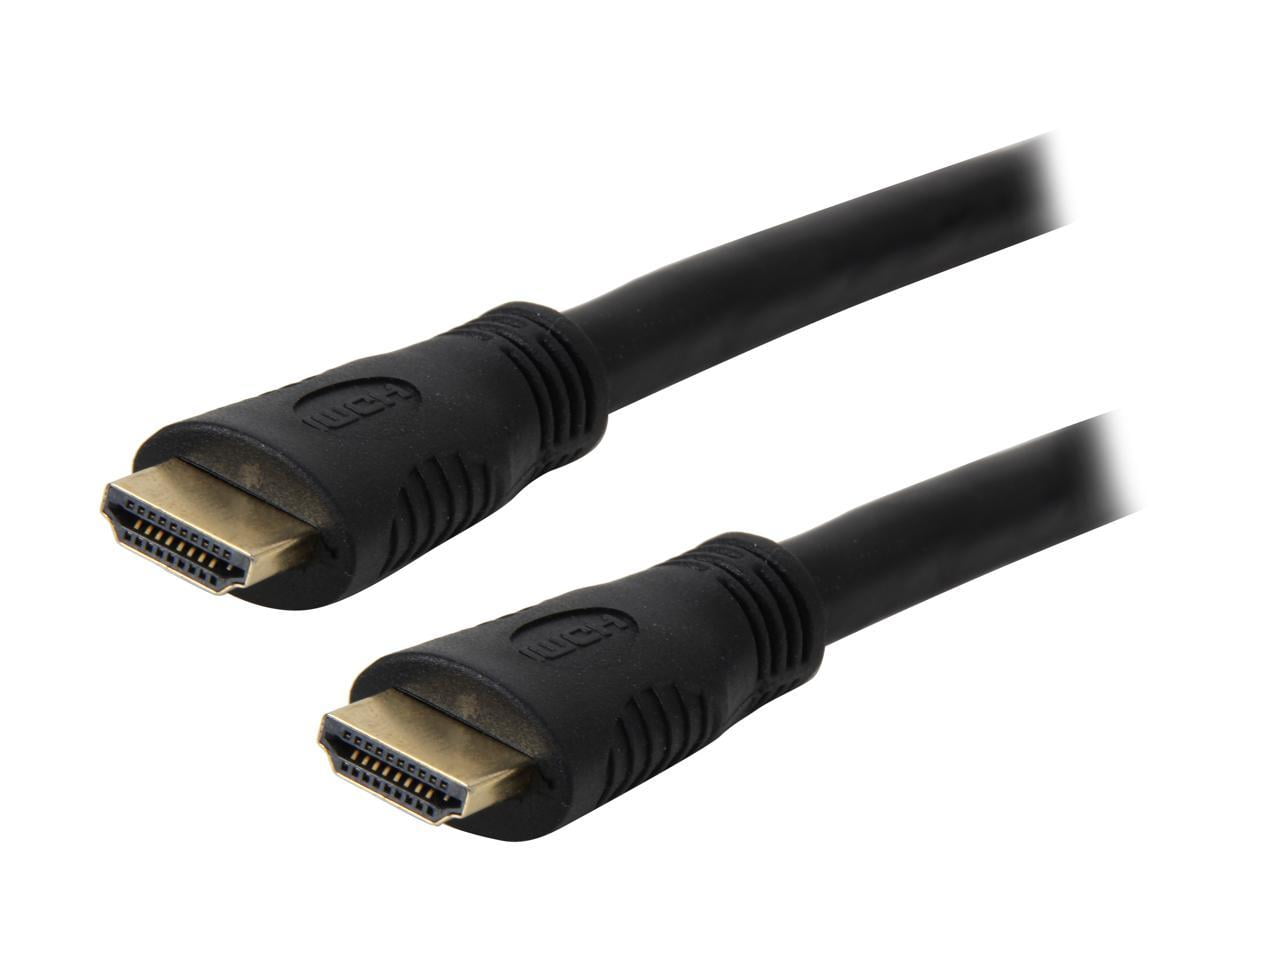 High Speed Cable Mini HDMI to HDMI Male / Male 5 m Black - HDMI